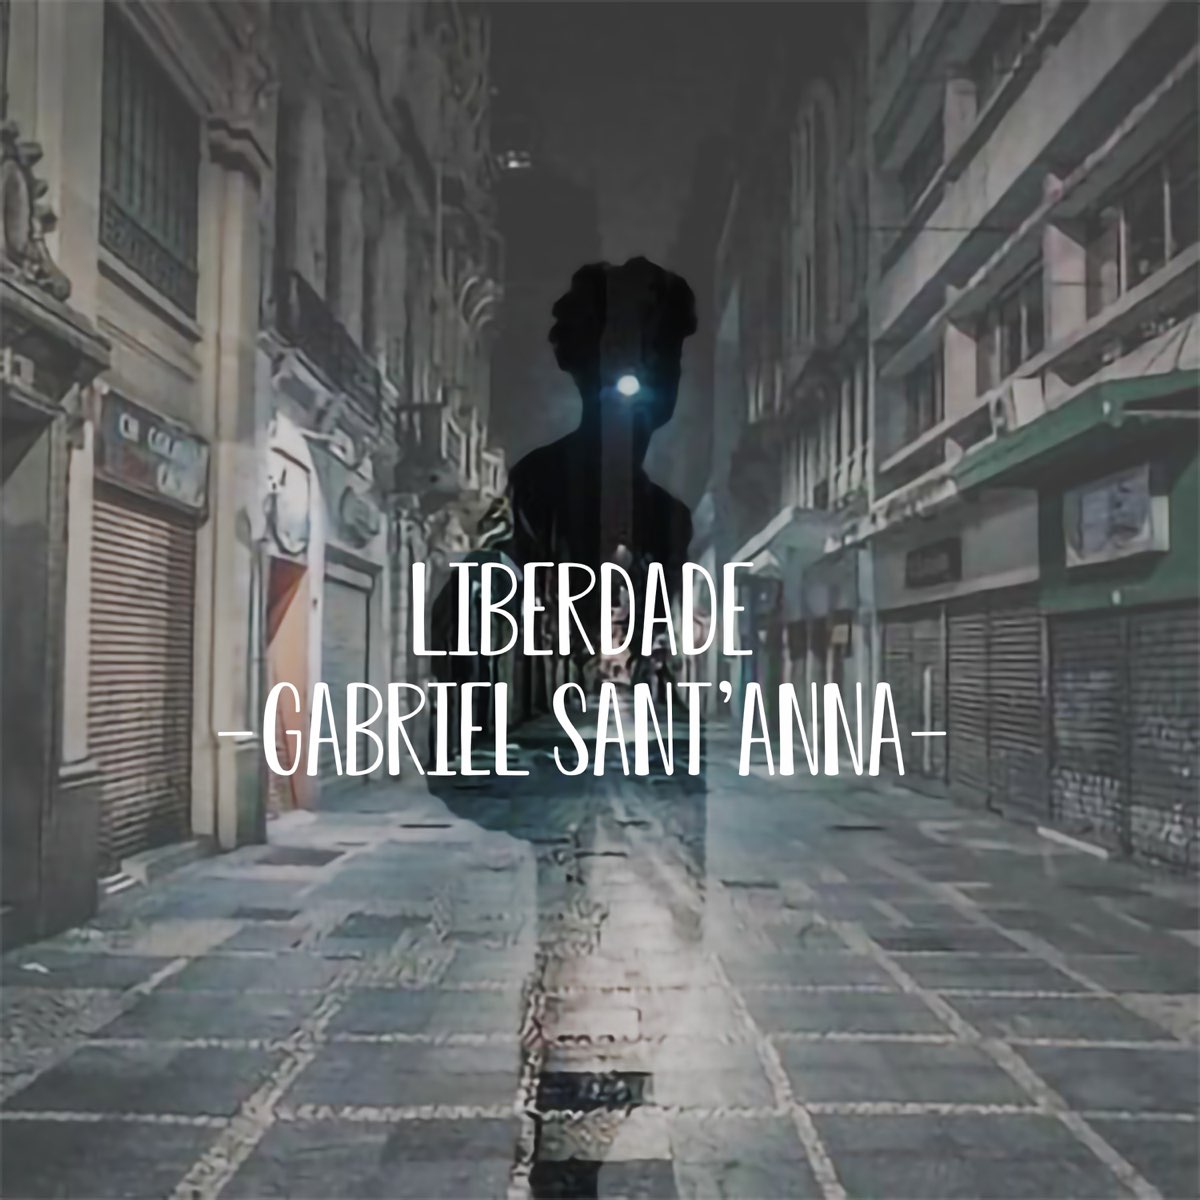 Liberdade (Sabo) - Single - Album by Enygma Rapper - Apple Music